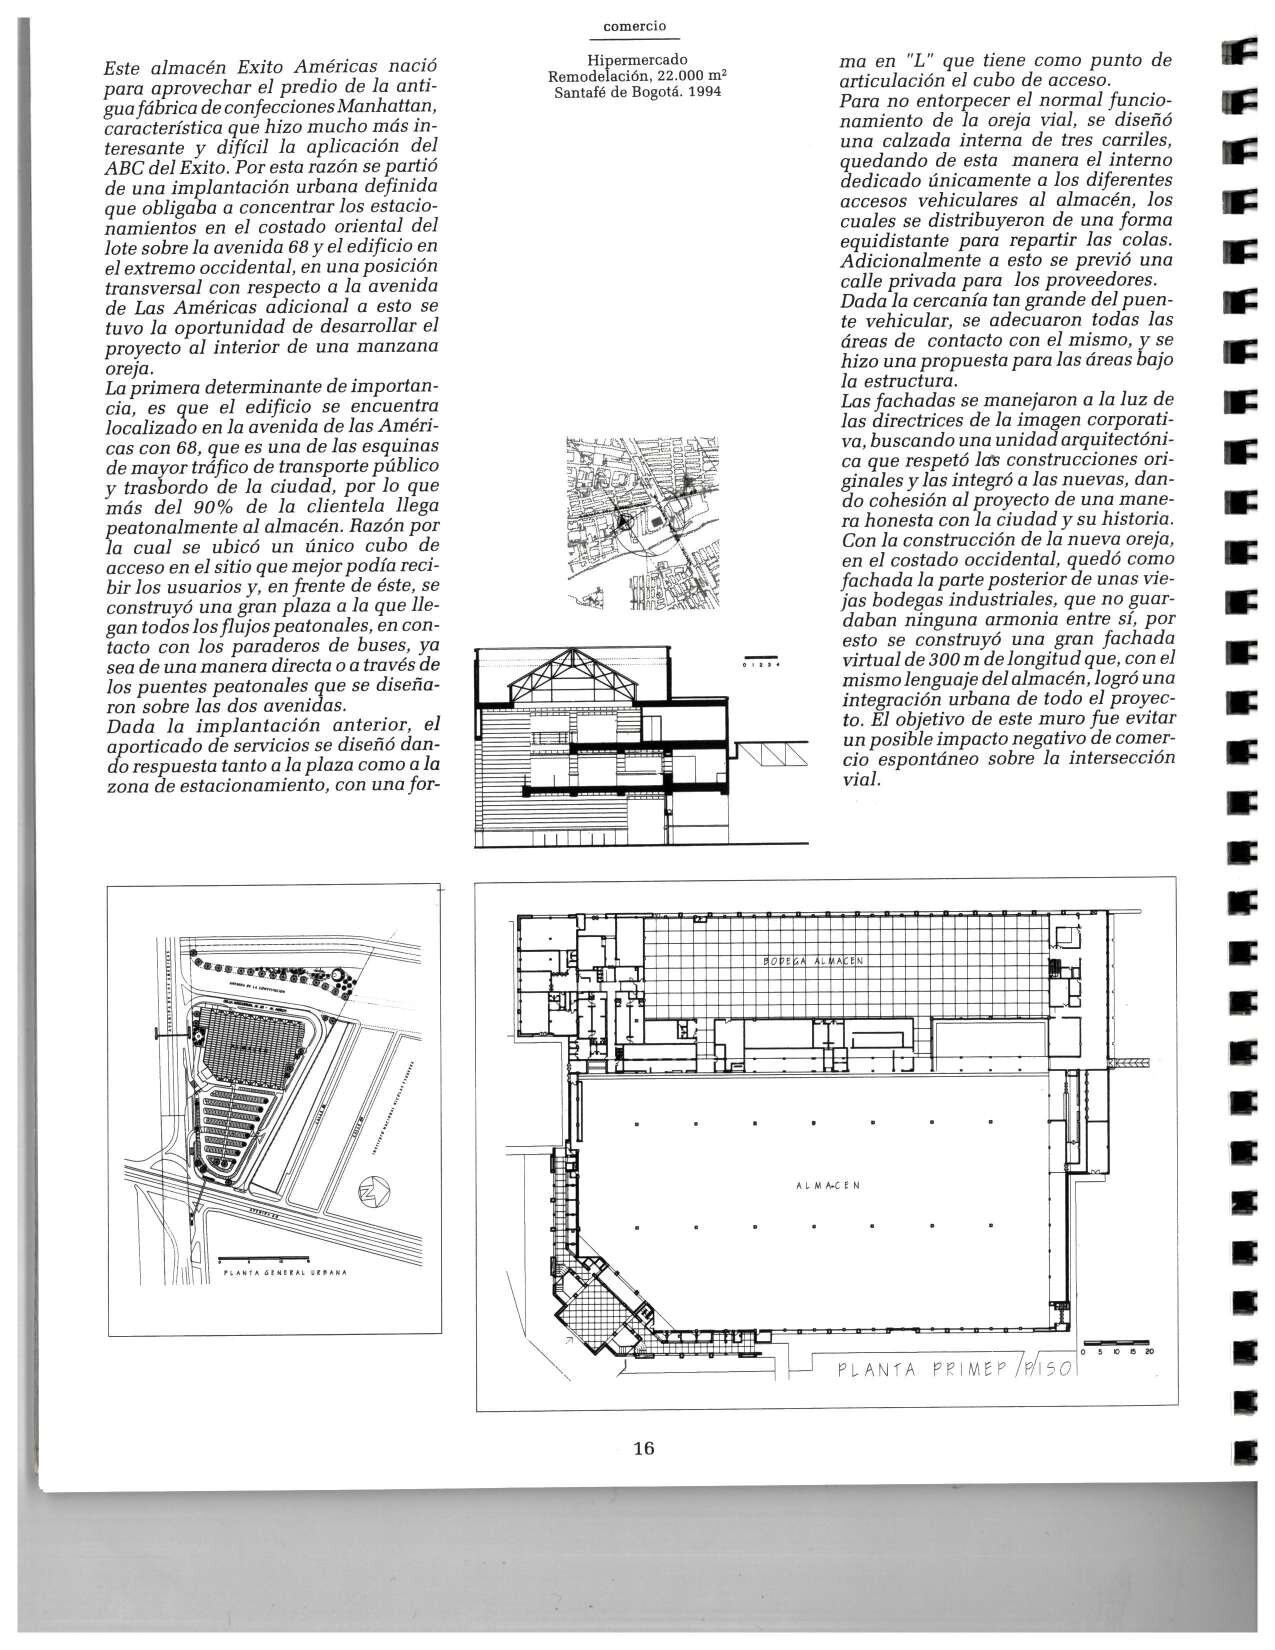 1995_Obra Contexto Urbano_Revista PROA_compressed_page-0016.jpg